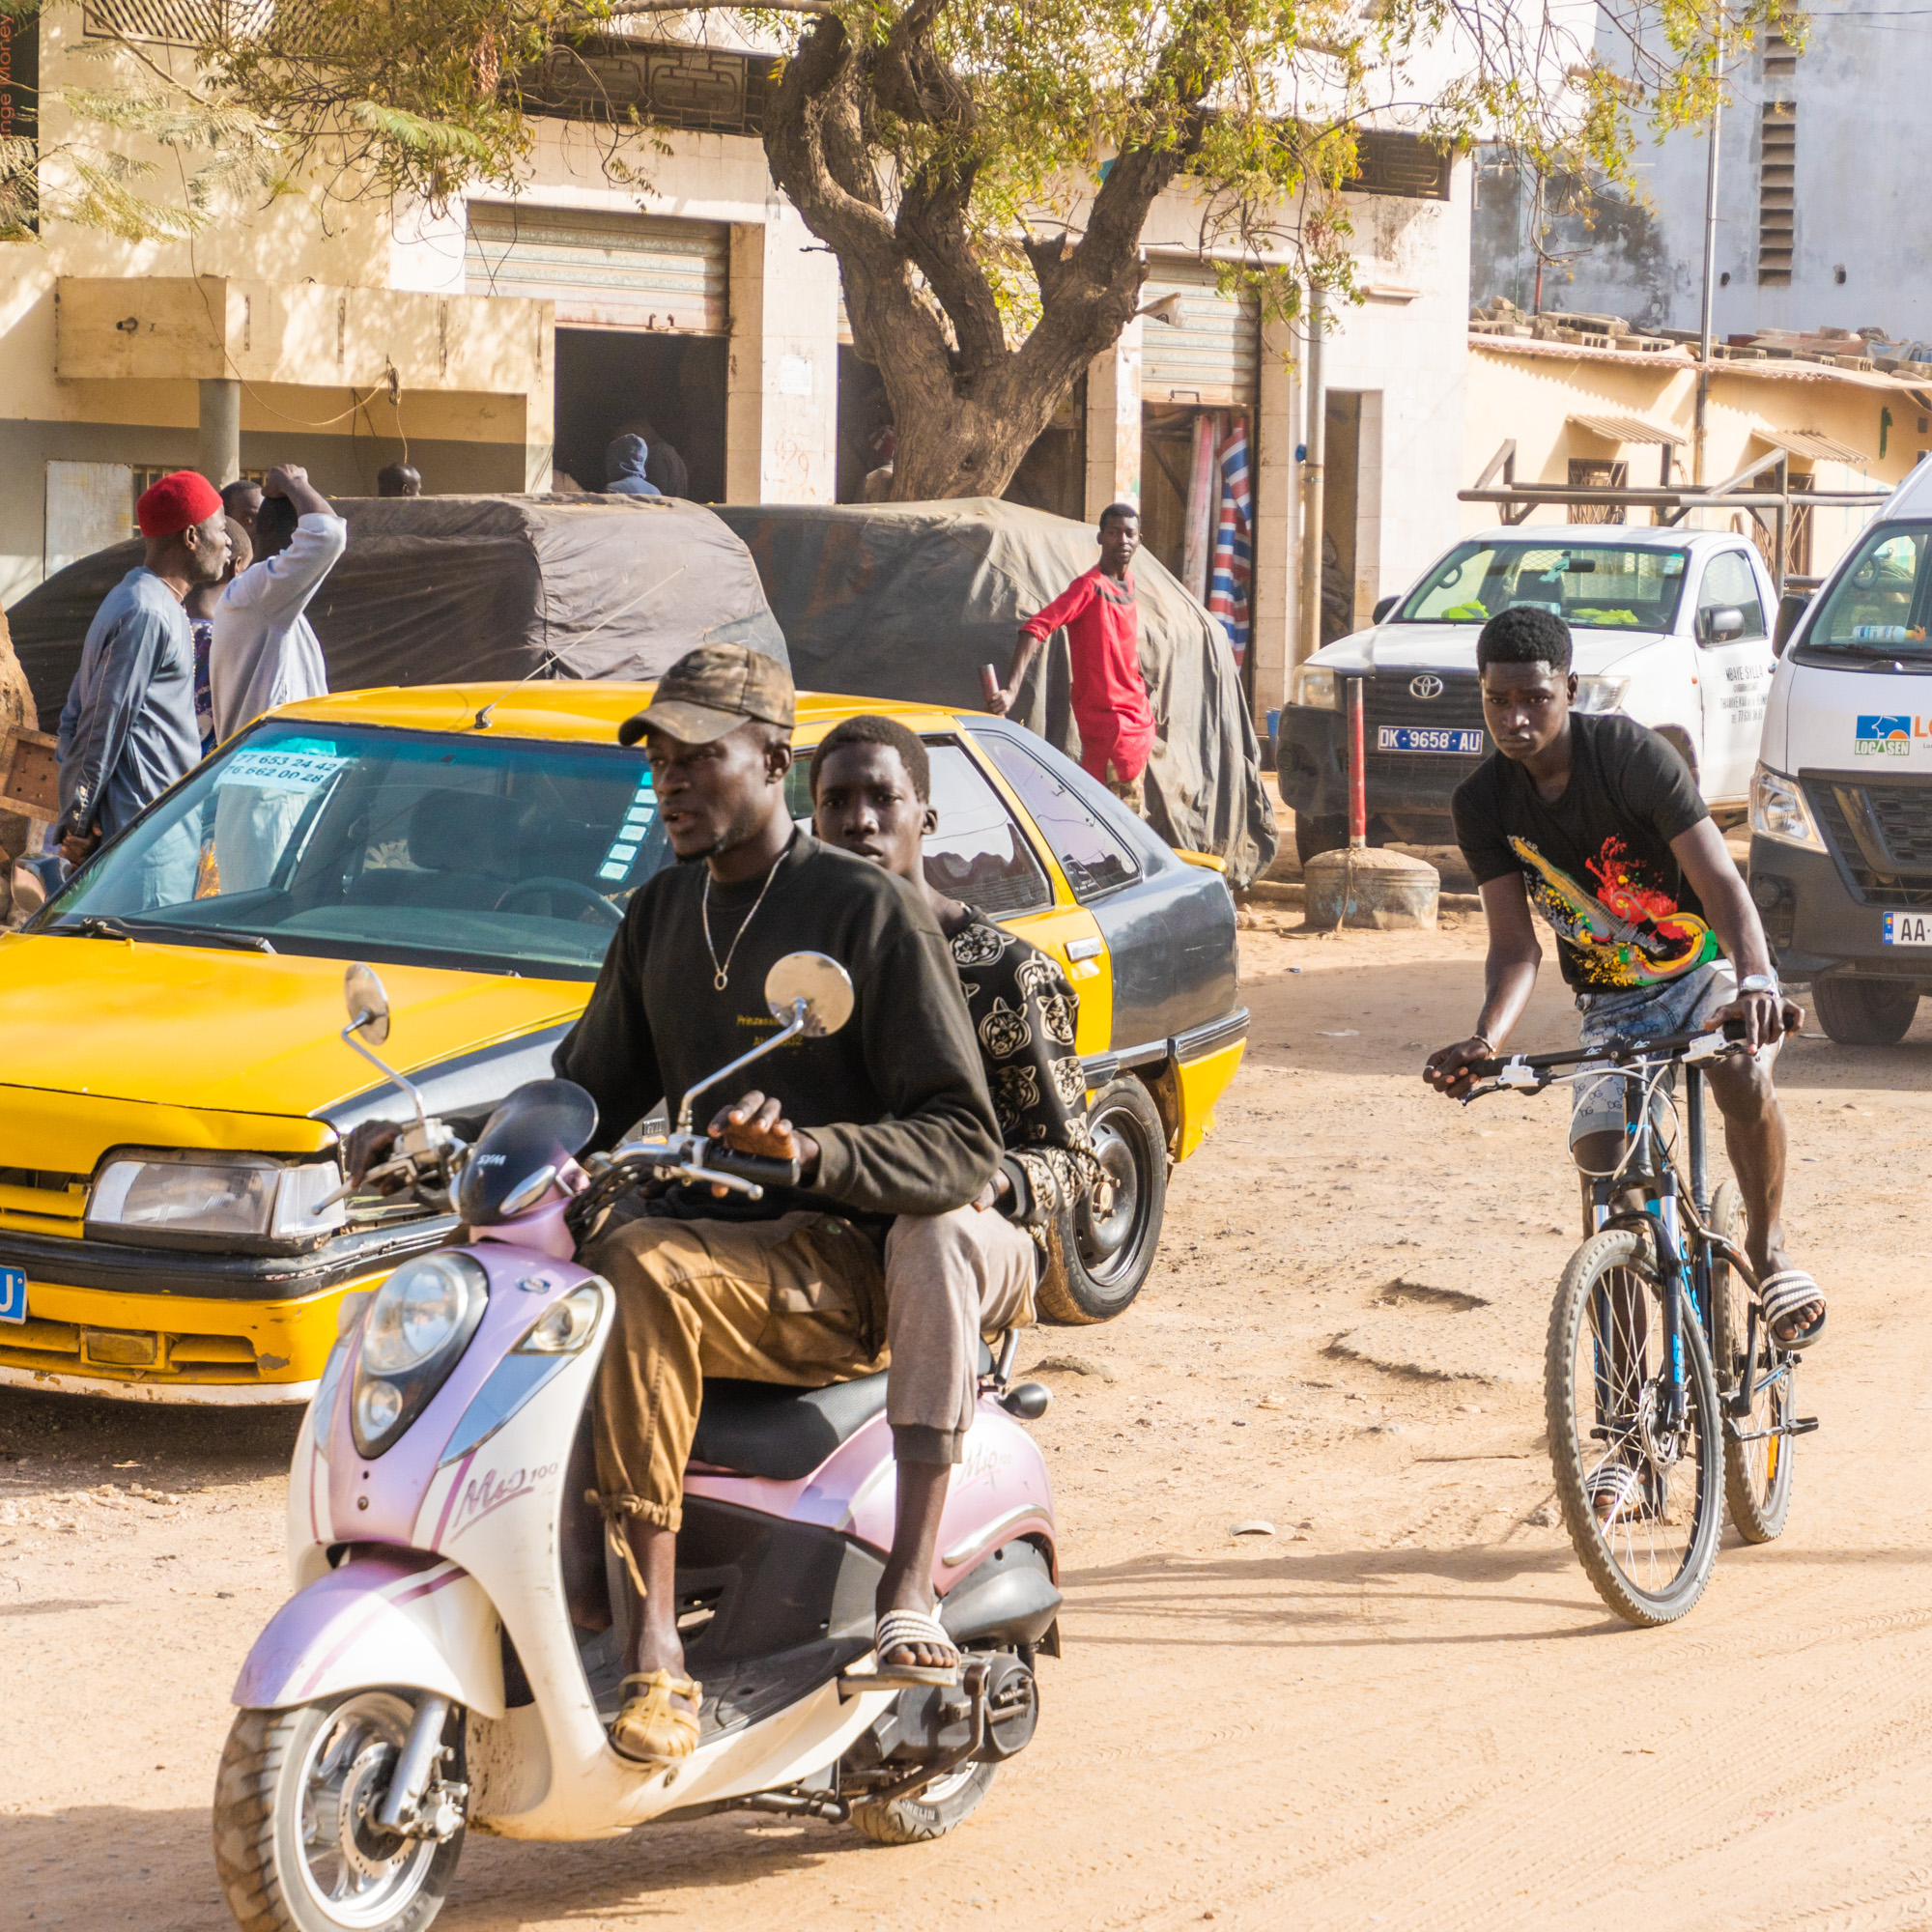 On two wheels through Dakar